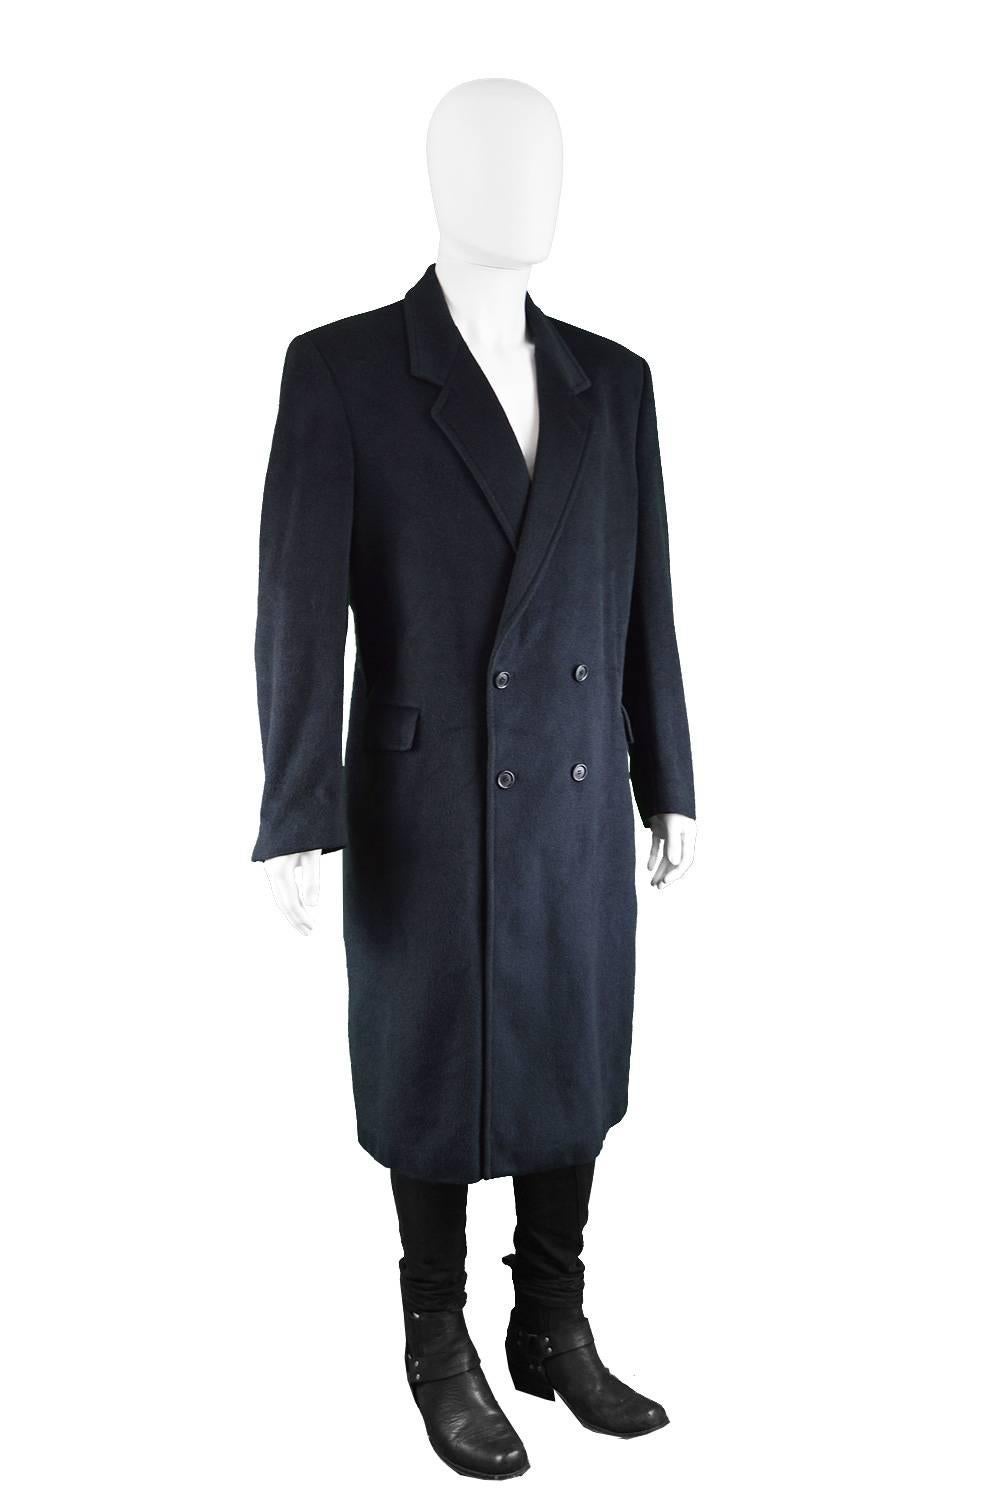 Black Pierre Cardin Men's Navy Blue Cashmere and Wool Belted Vintage Overcoat, 1980s